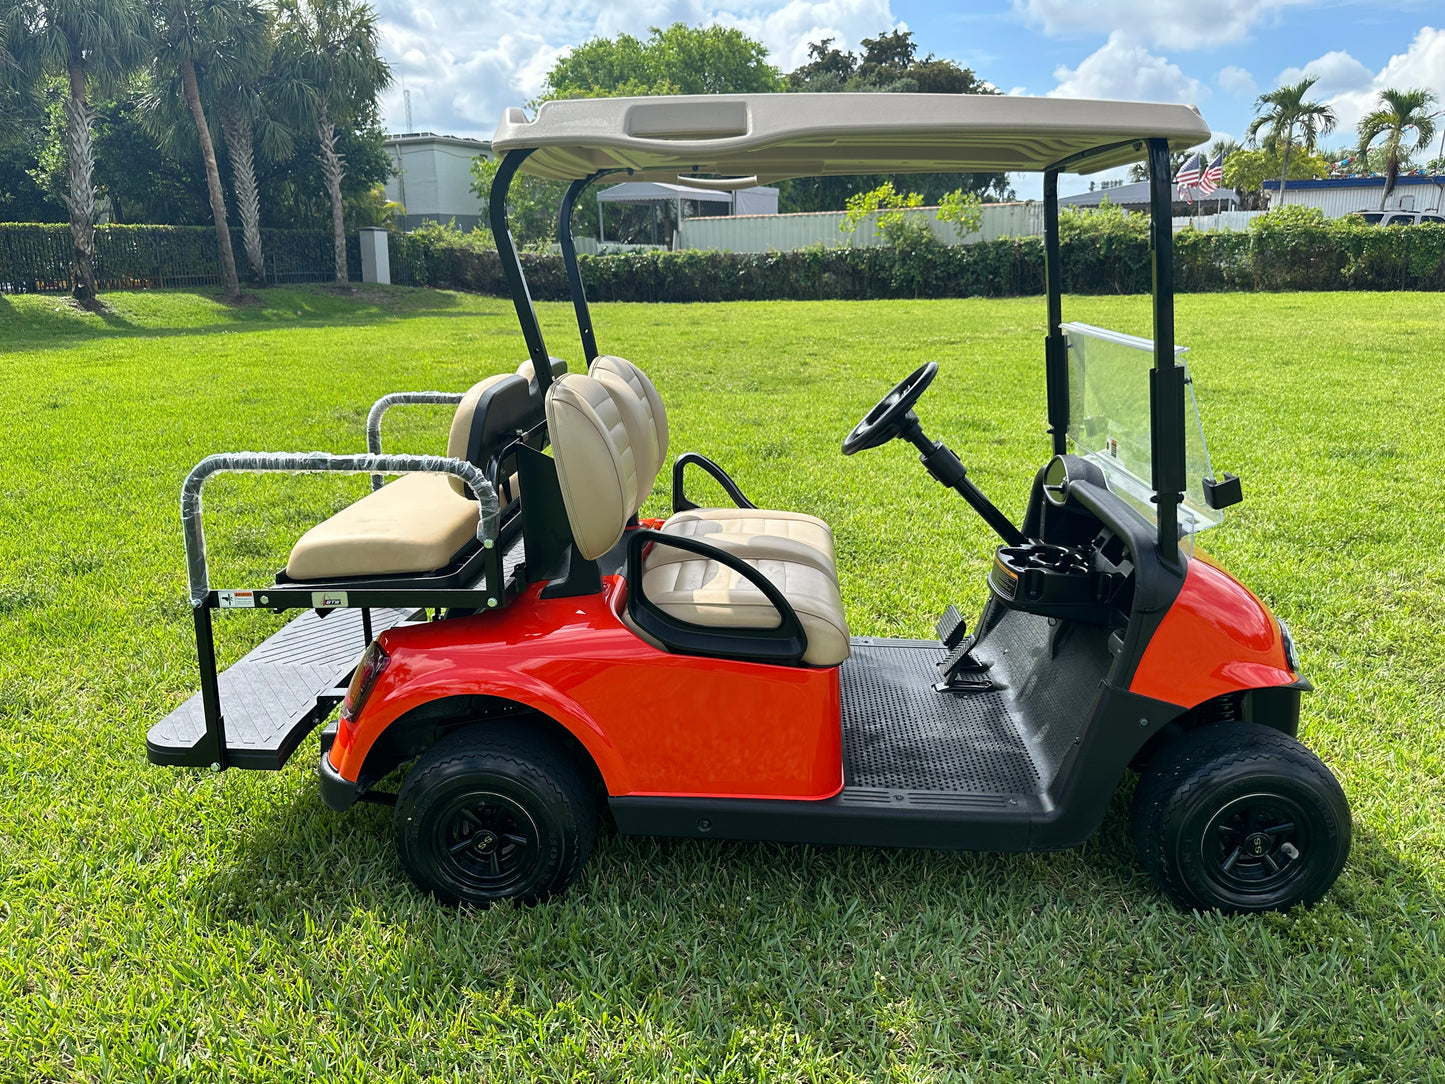 Cutting Edge Golf Carts - Go Mango Orange EZGO RXV: AC Driven, 48V Trojan Batteries, Custom Style, Black Wheel Covers, Back Seat, Deluxe Light Kit - Signals, Brake Light & Horn